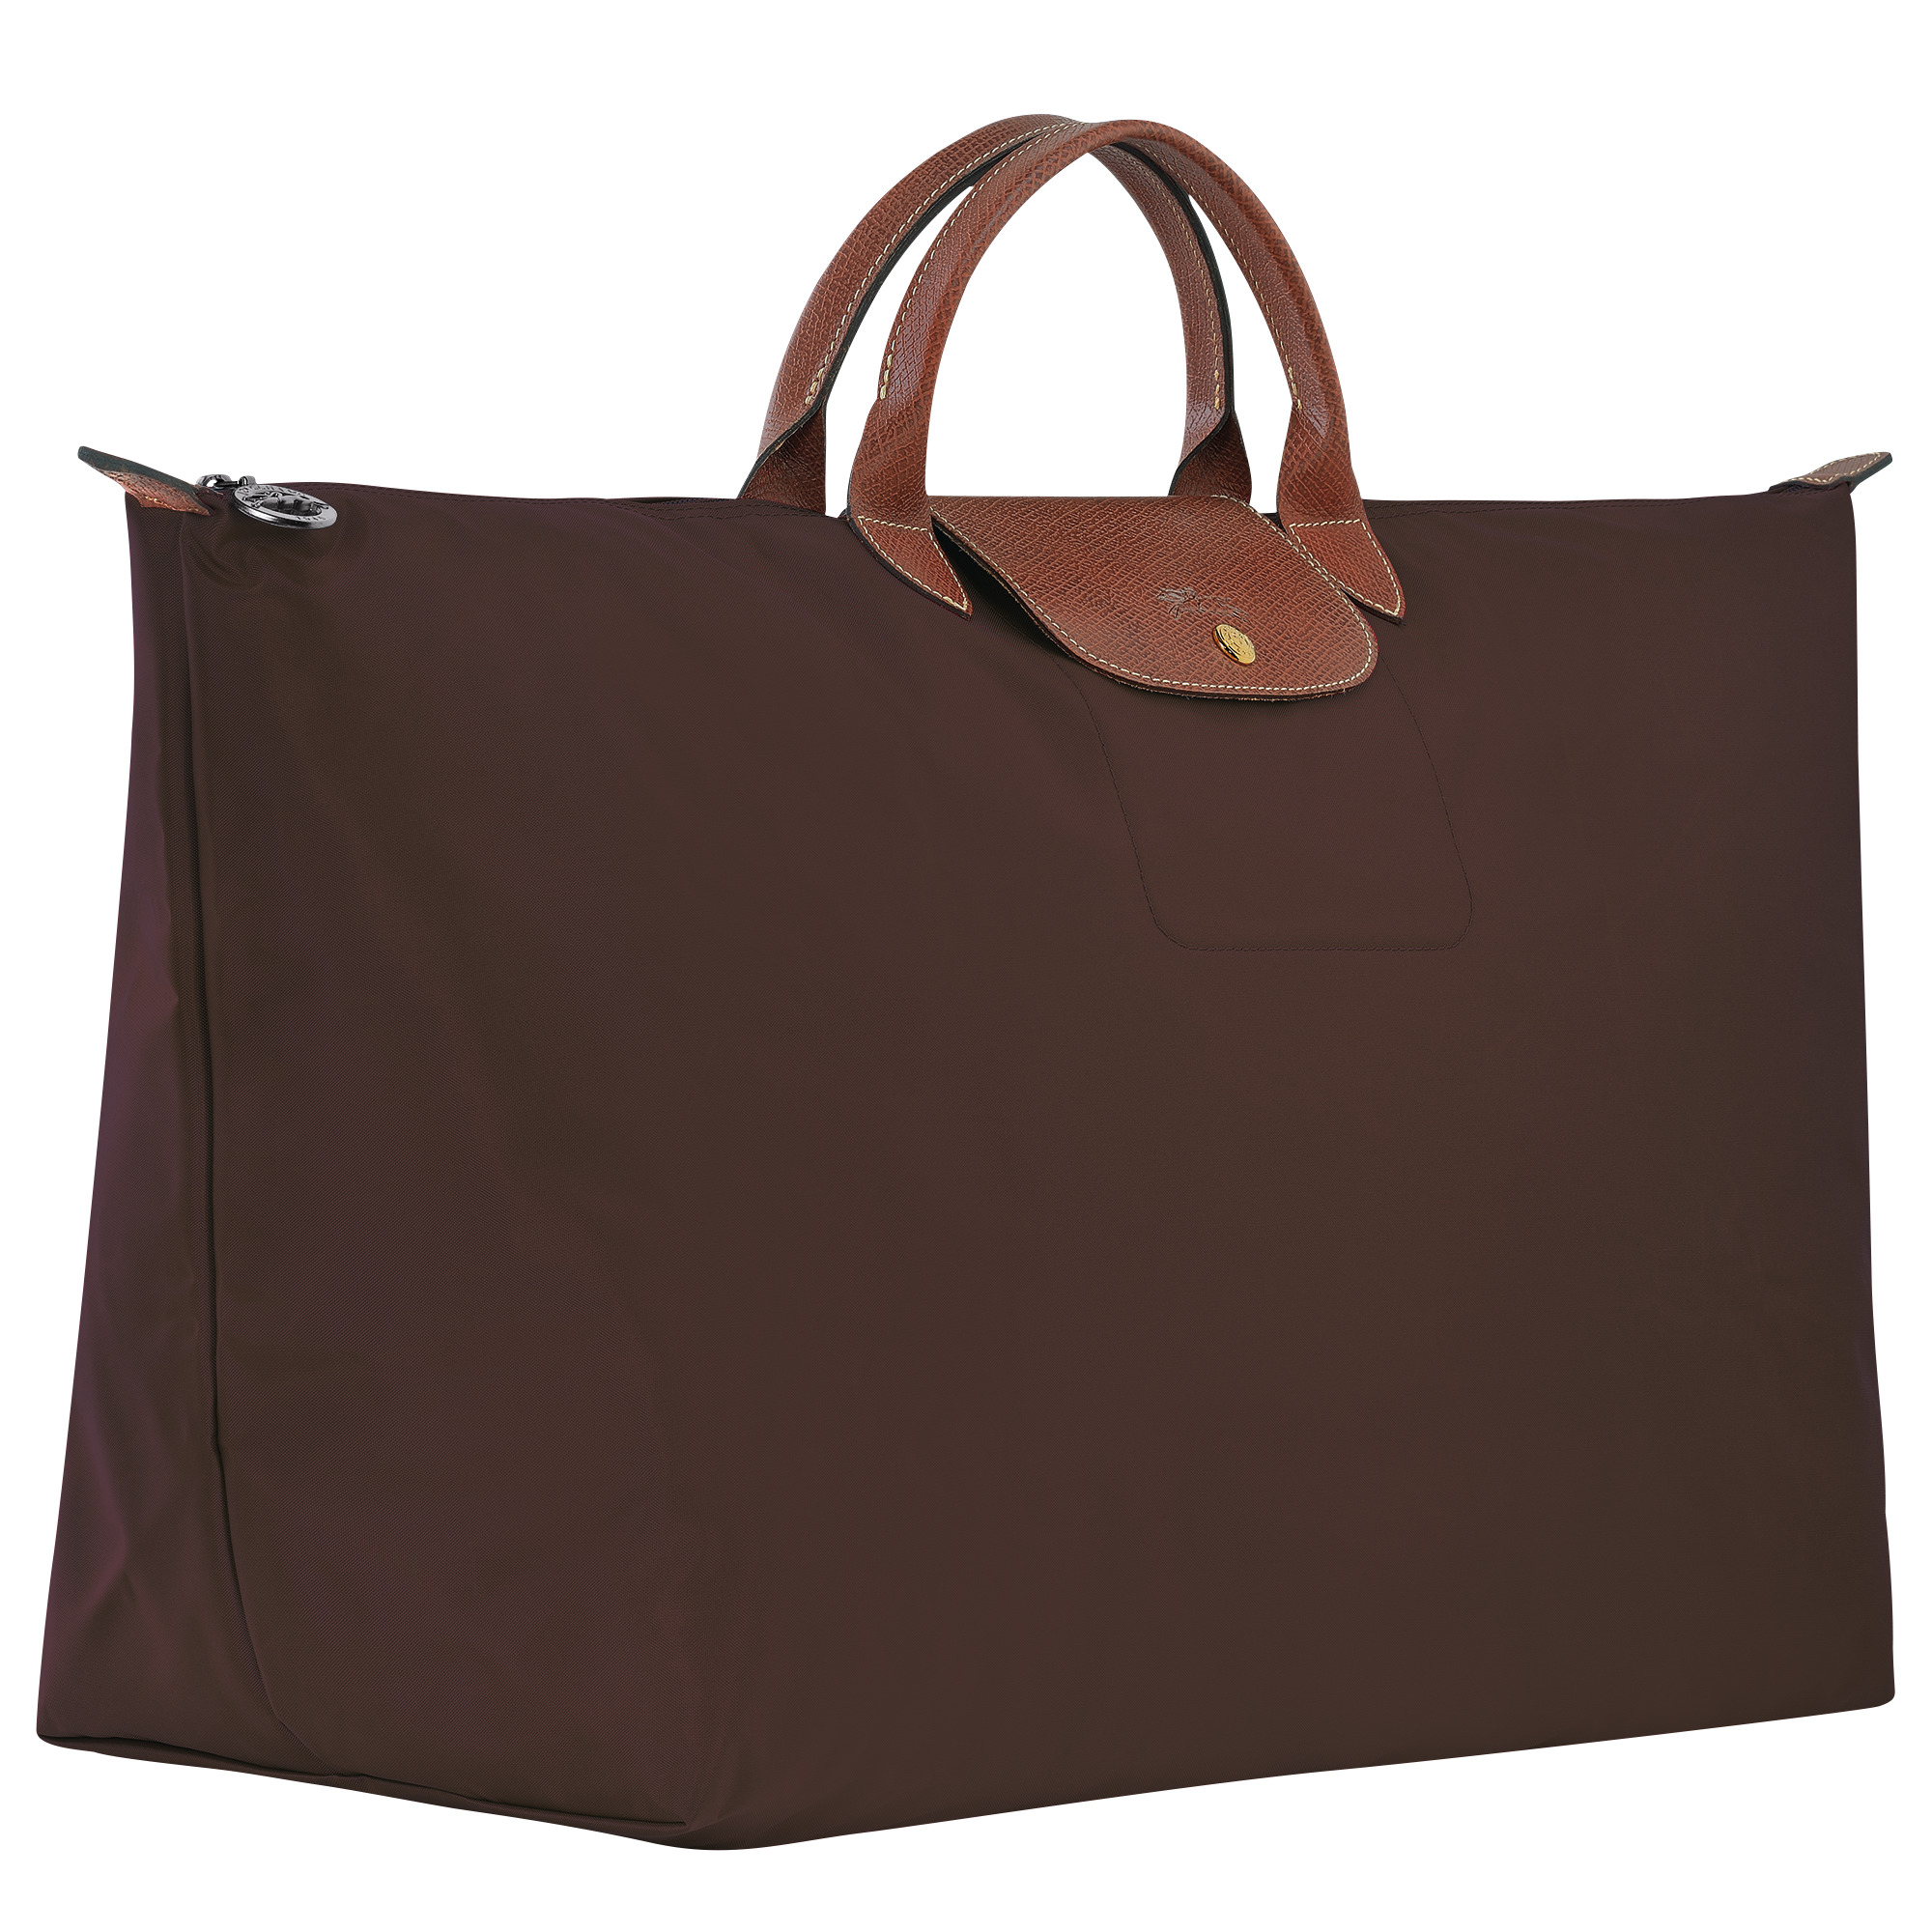 Le Pliage Original M Travel bag Ebony - Recycled canvas - 2